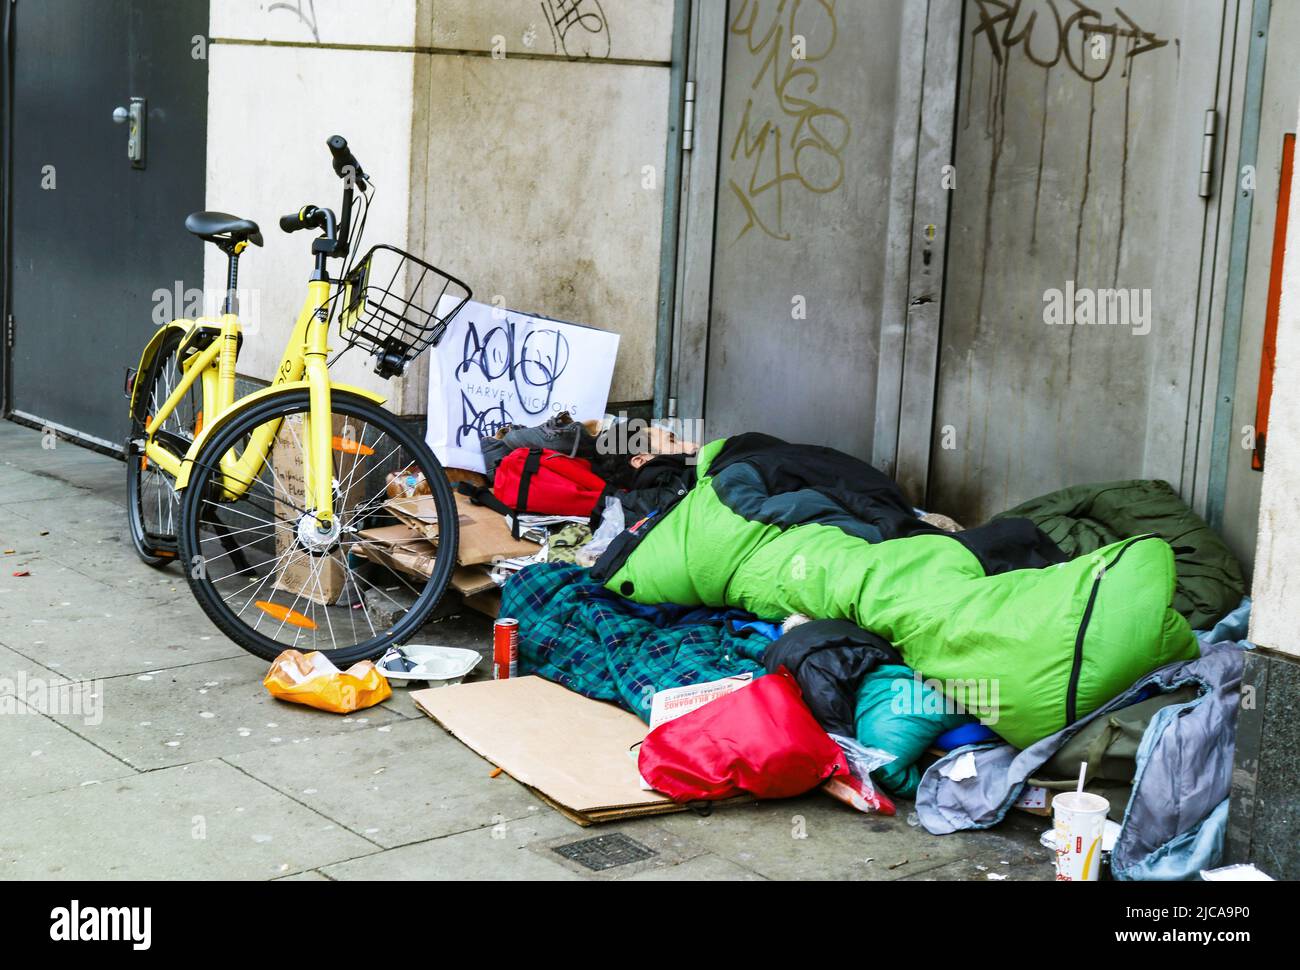 Homeless man with bicycle and sleeping bag asleep in doorway in South Kennsington London UK 1-10-2018 Stock Photo